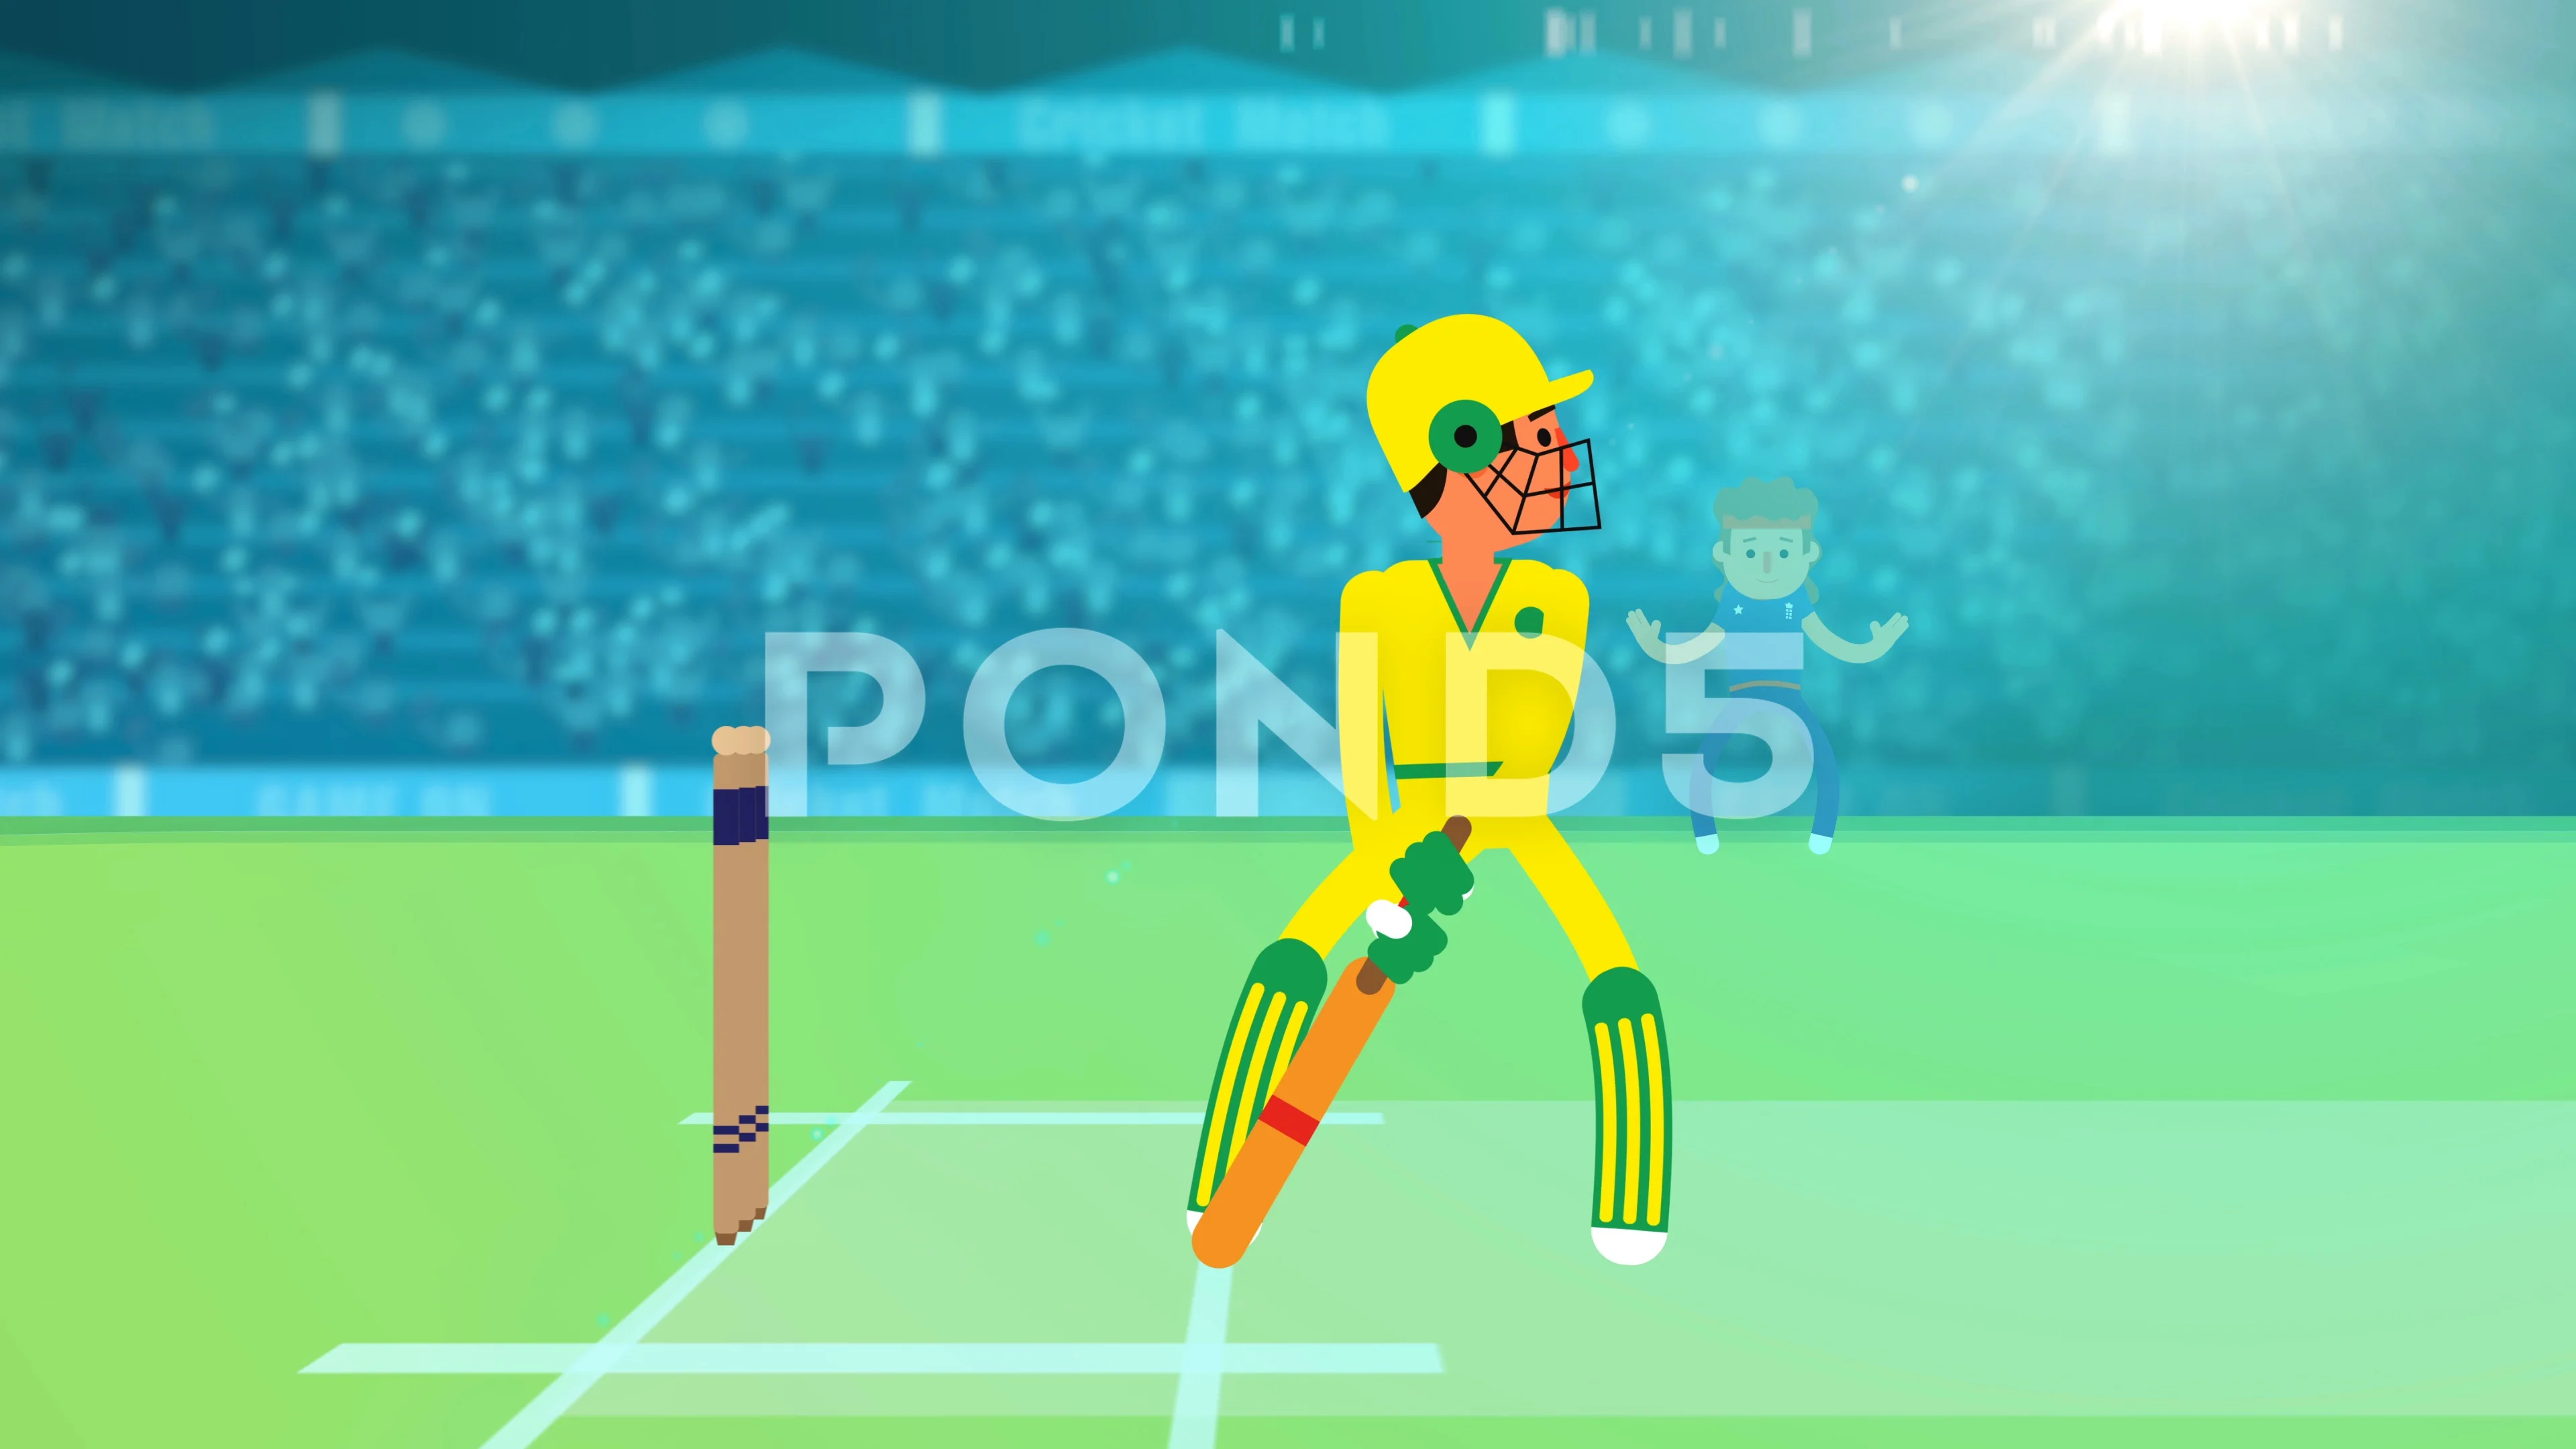 cricket match animation